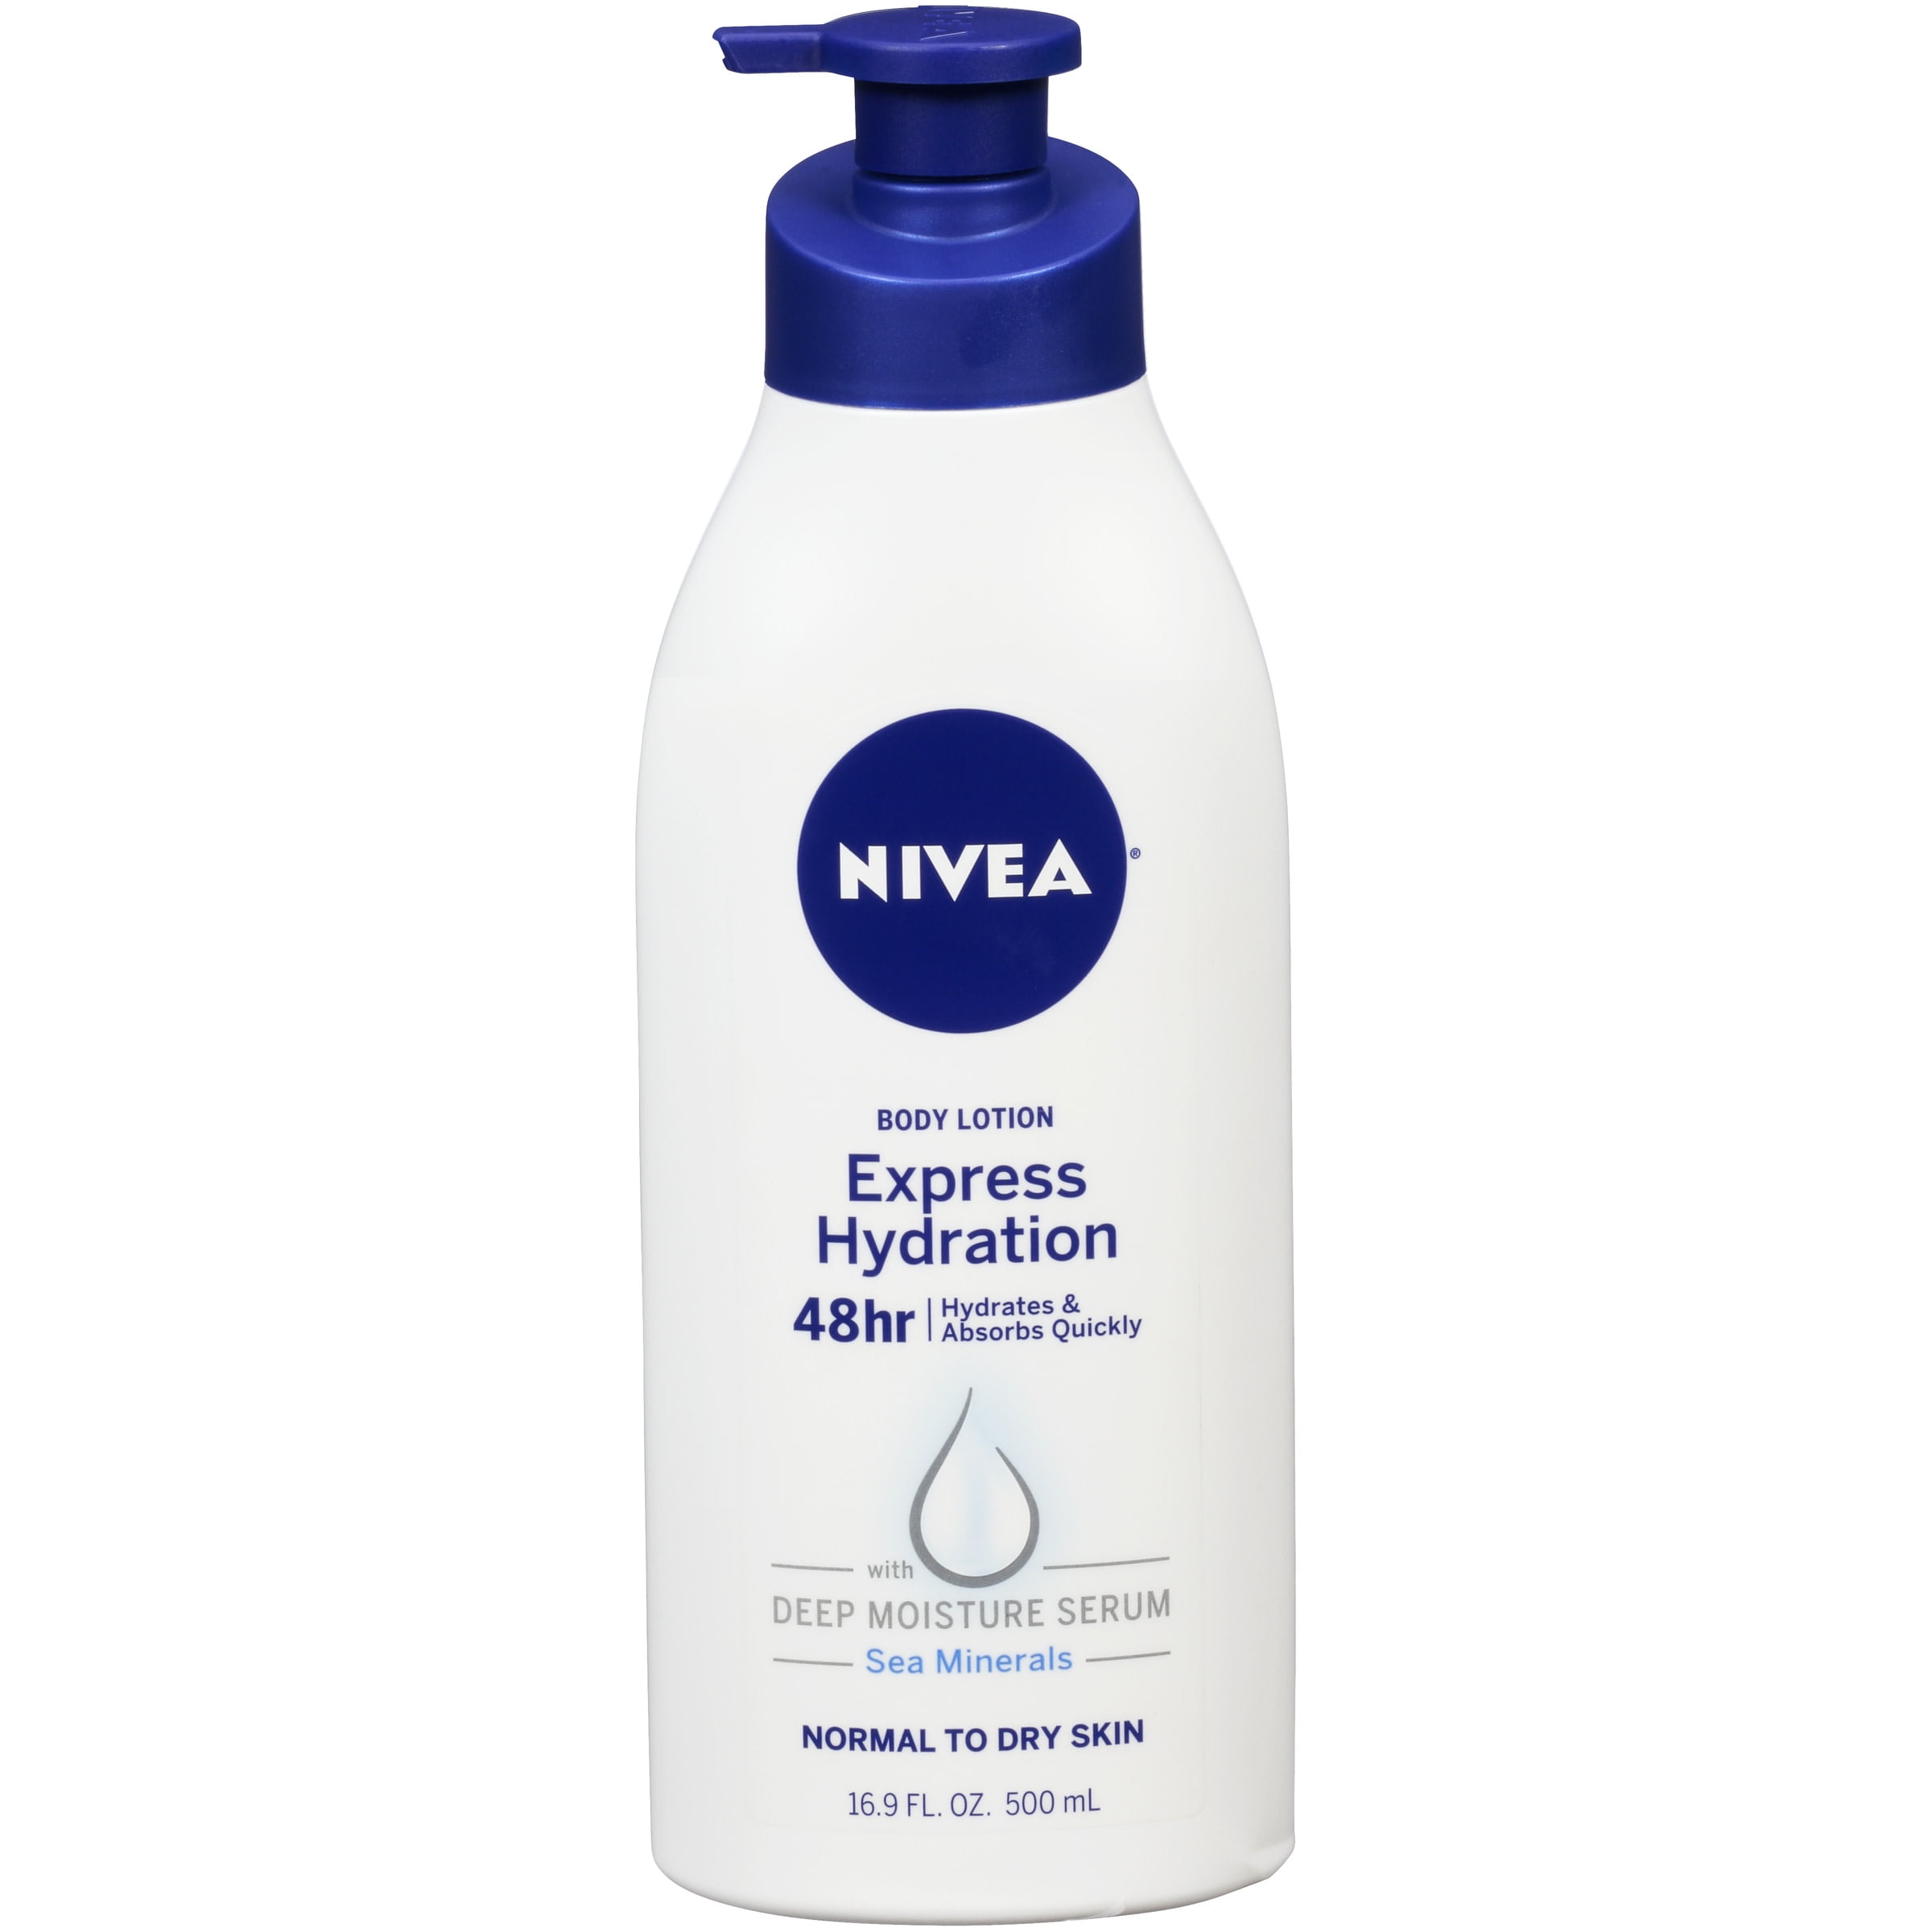 NIVEA Express Hydration Body Lotion 16.9 fl. oz. -